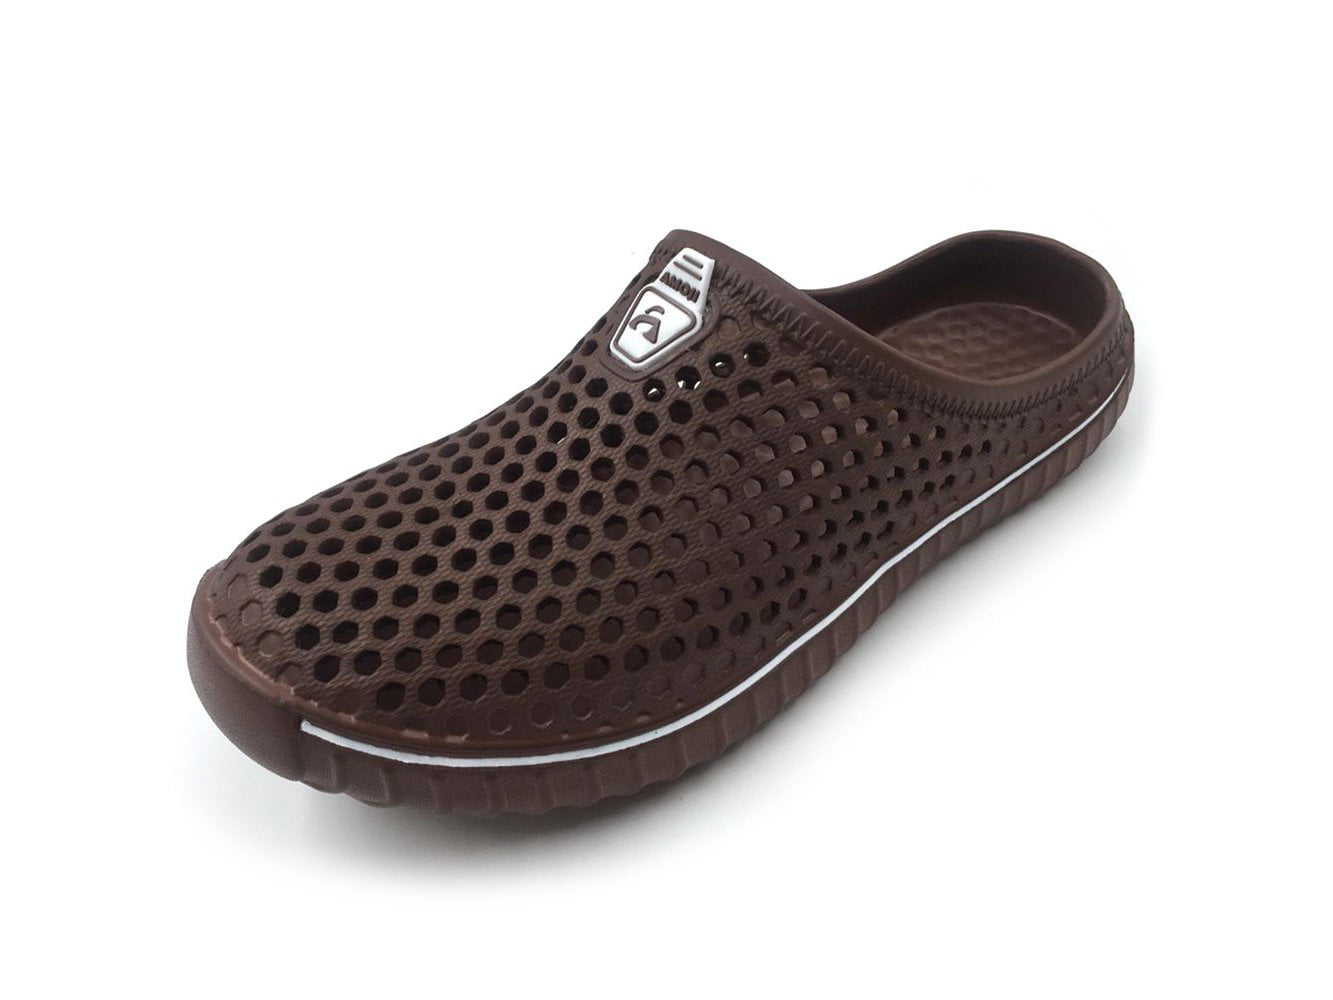 AMOJI Unisex Clogs Garden Shoes Slippers Sandals CL8818 